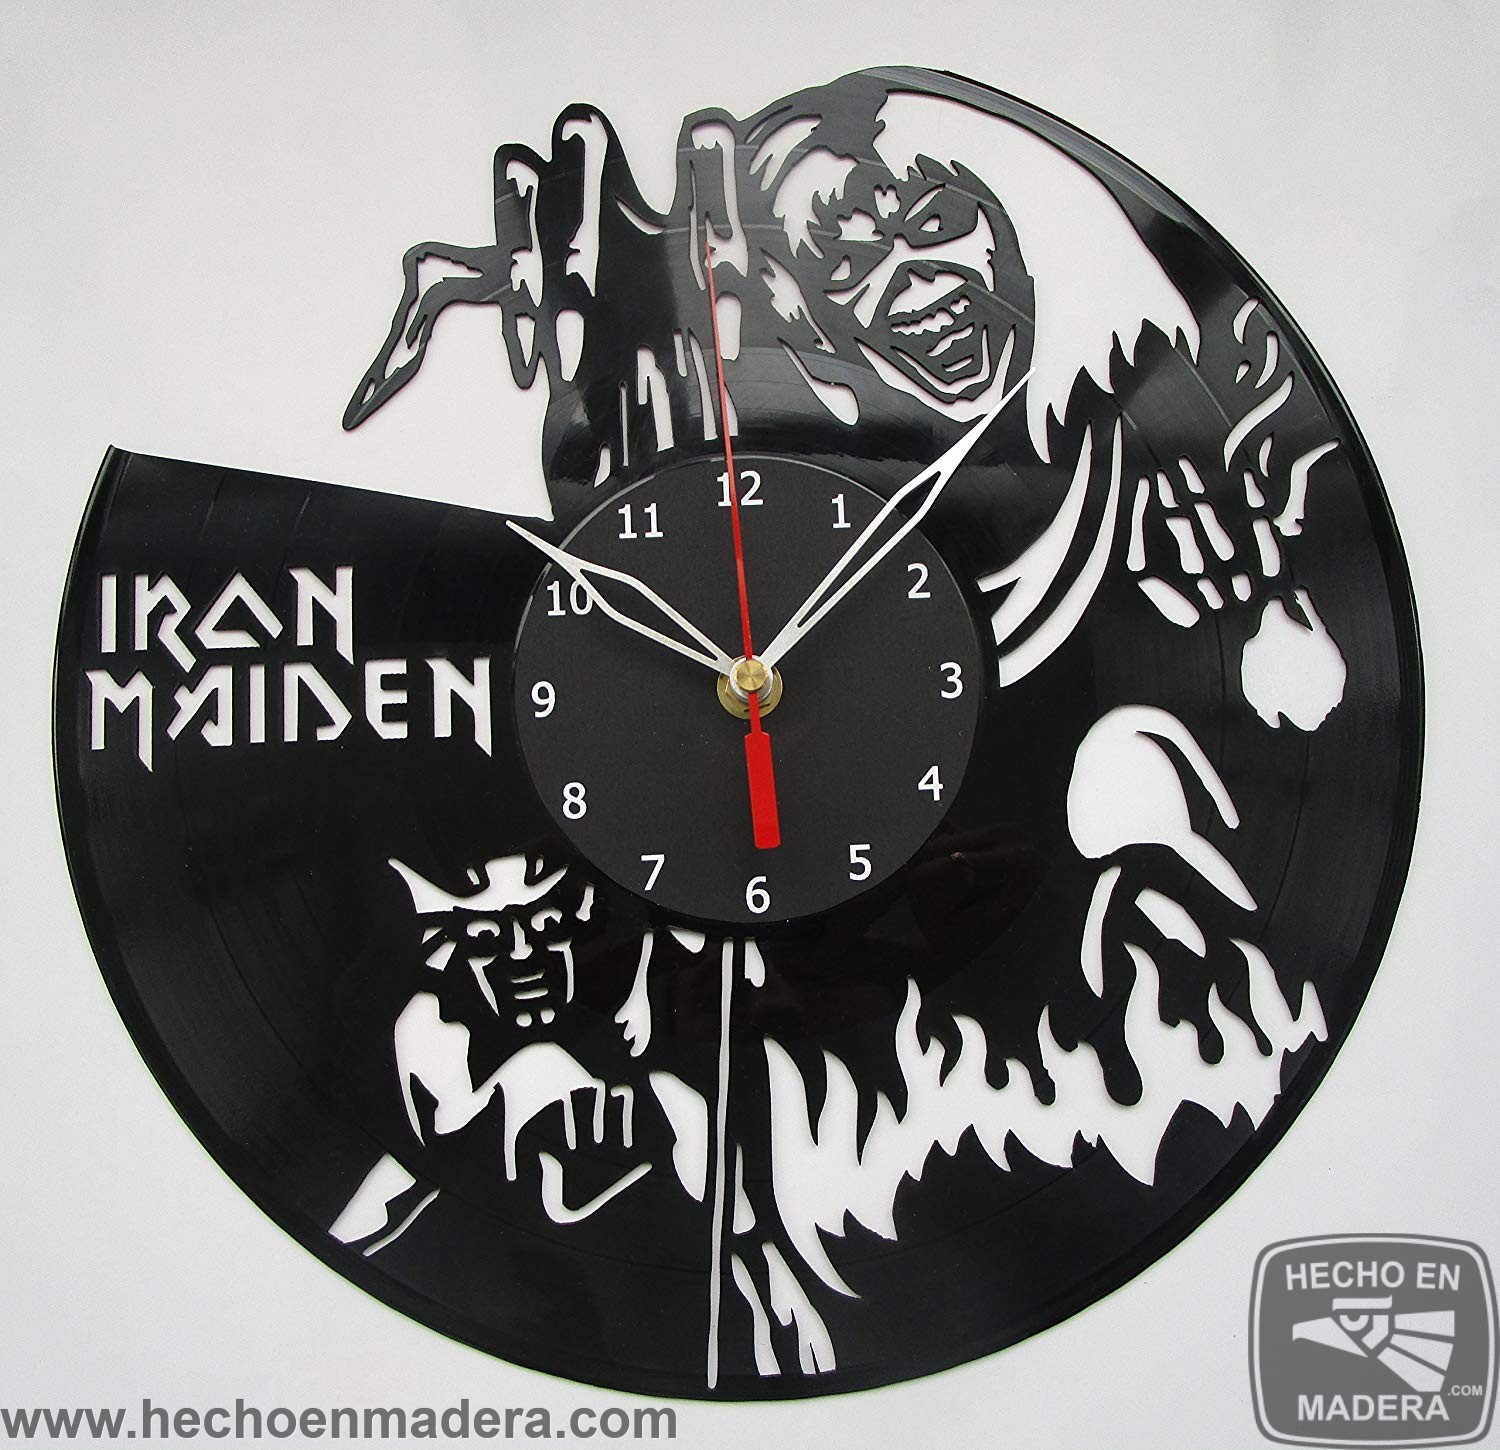 Iron Maiden 0041 – www.hechoenmadera.com